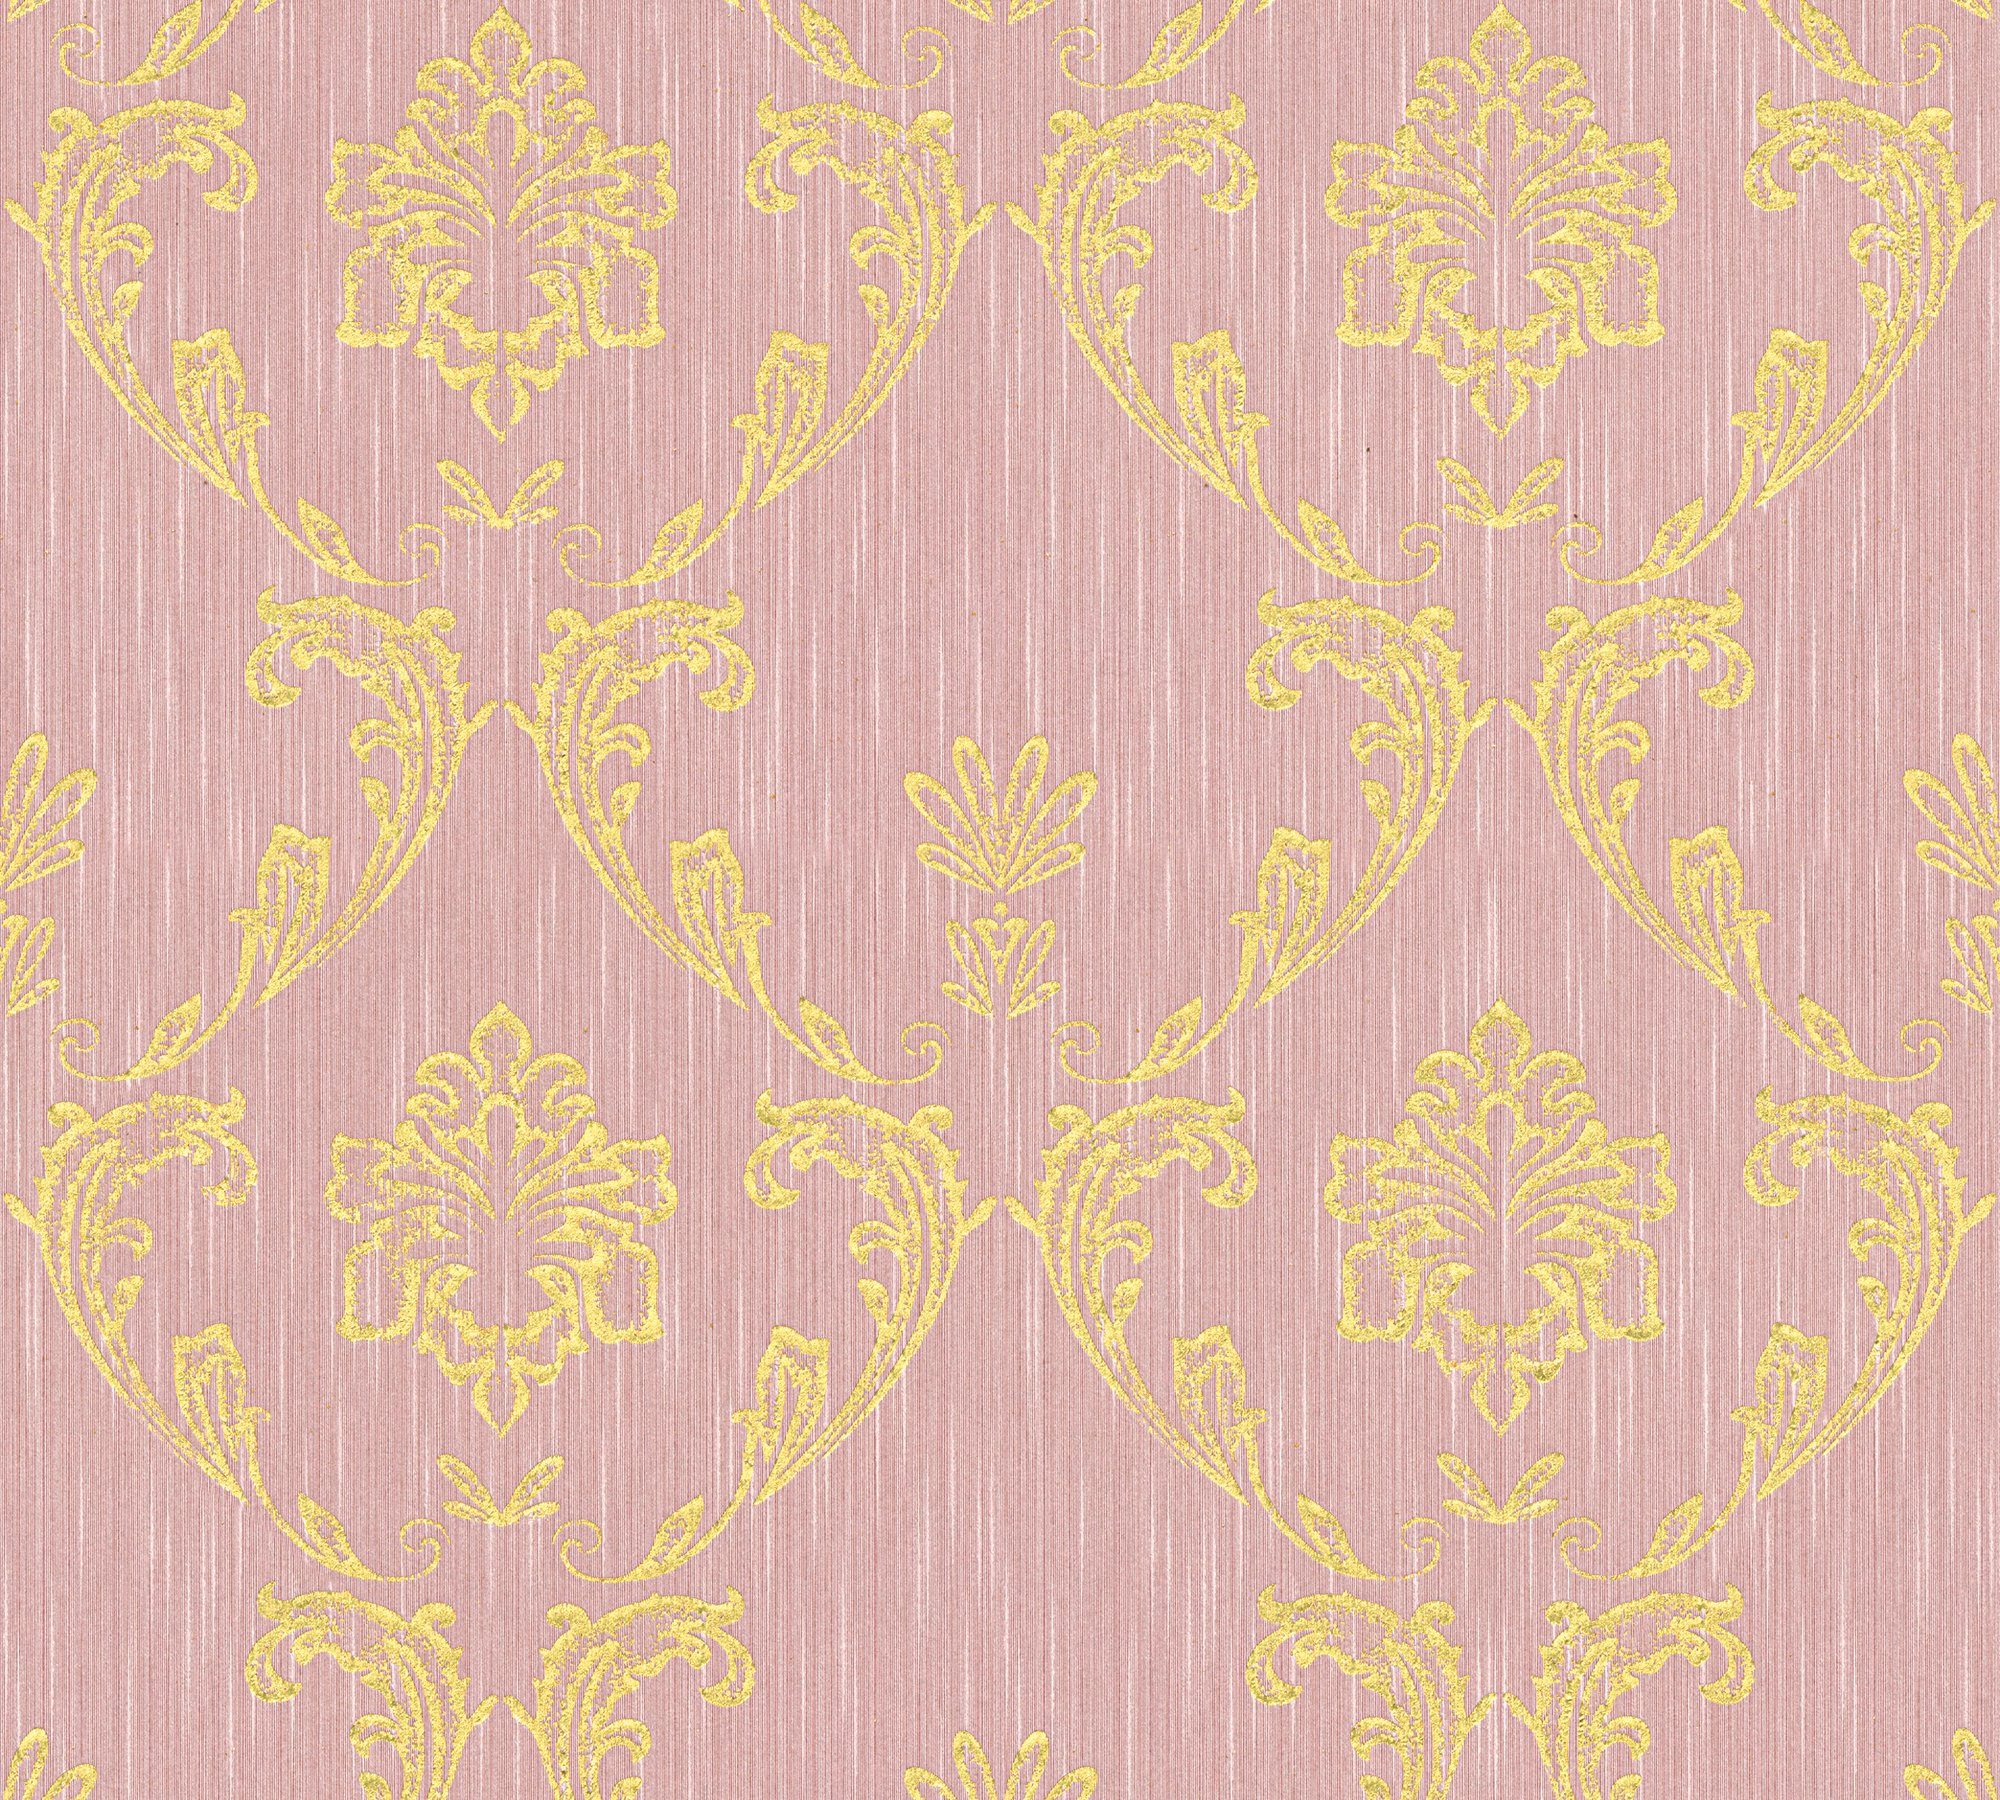 Architects gold/rosa Textiltapete Tapete Ornament glänzend, Silk, Metallic Paper samtig, Barock matt, Barock,